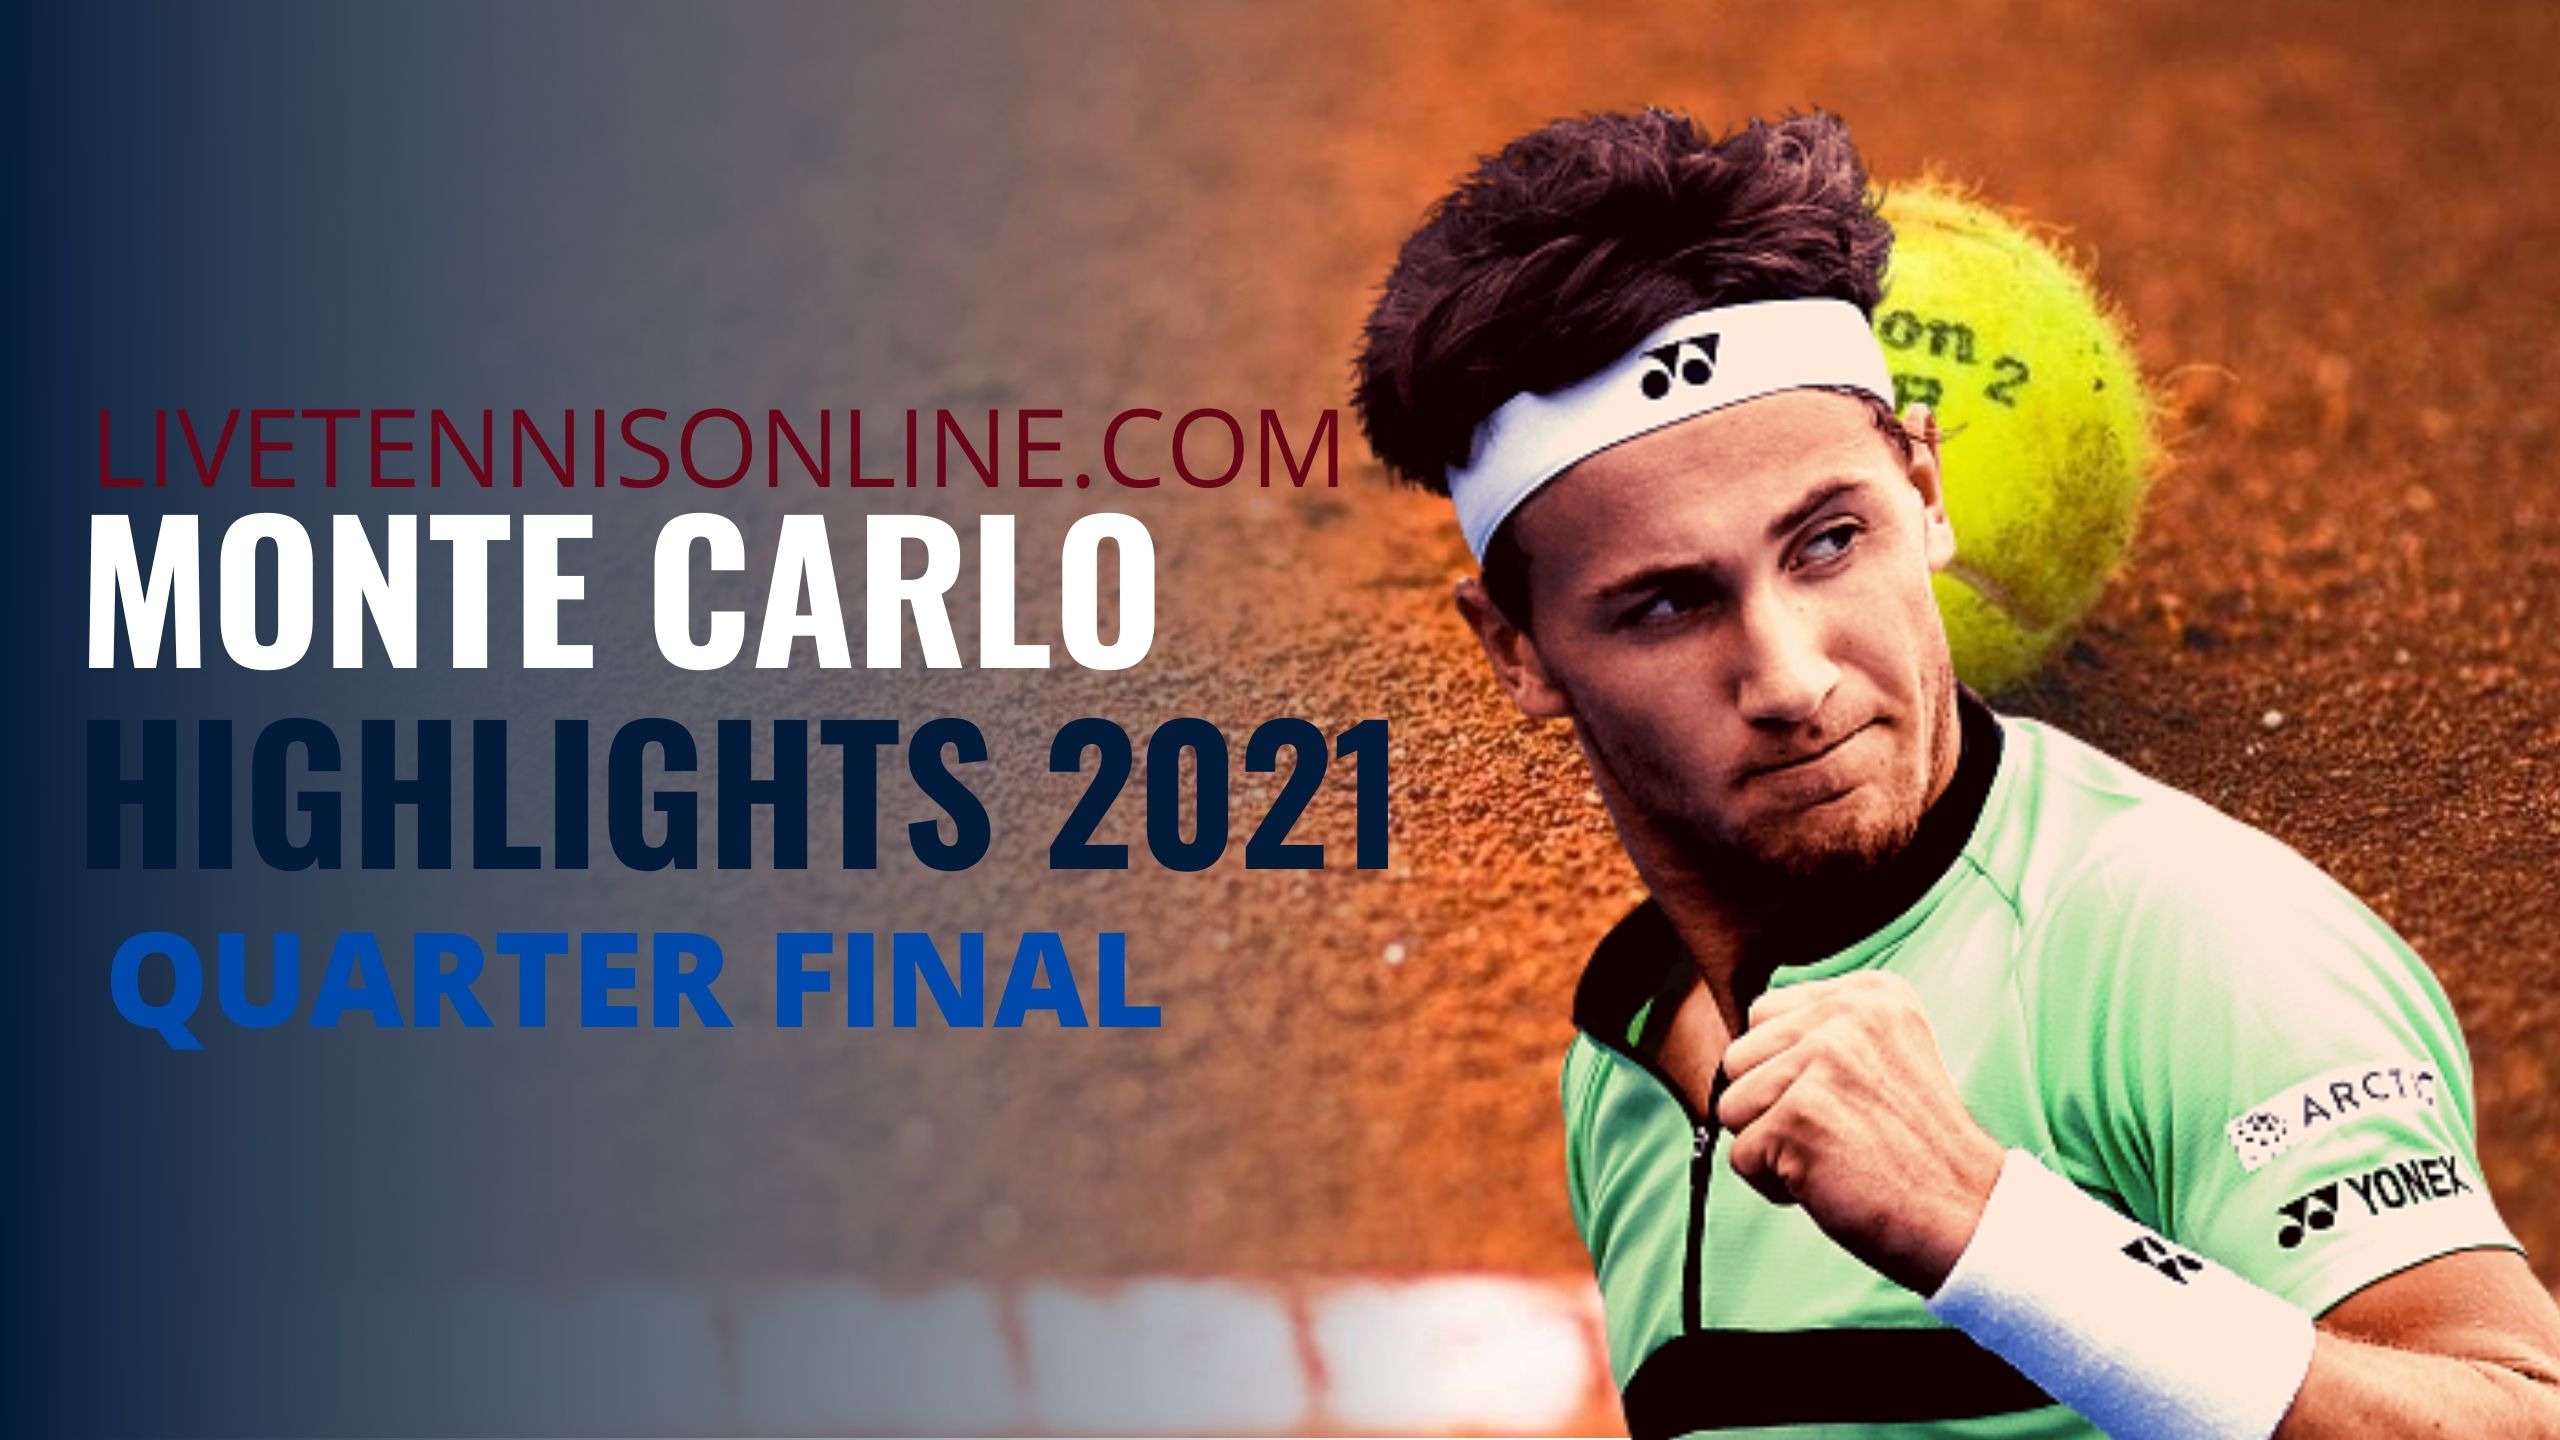 Ruud Vs Fognini Quarter Final Highlights 2021